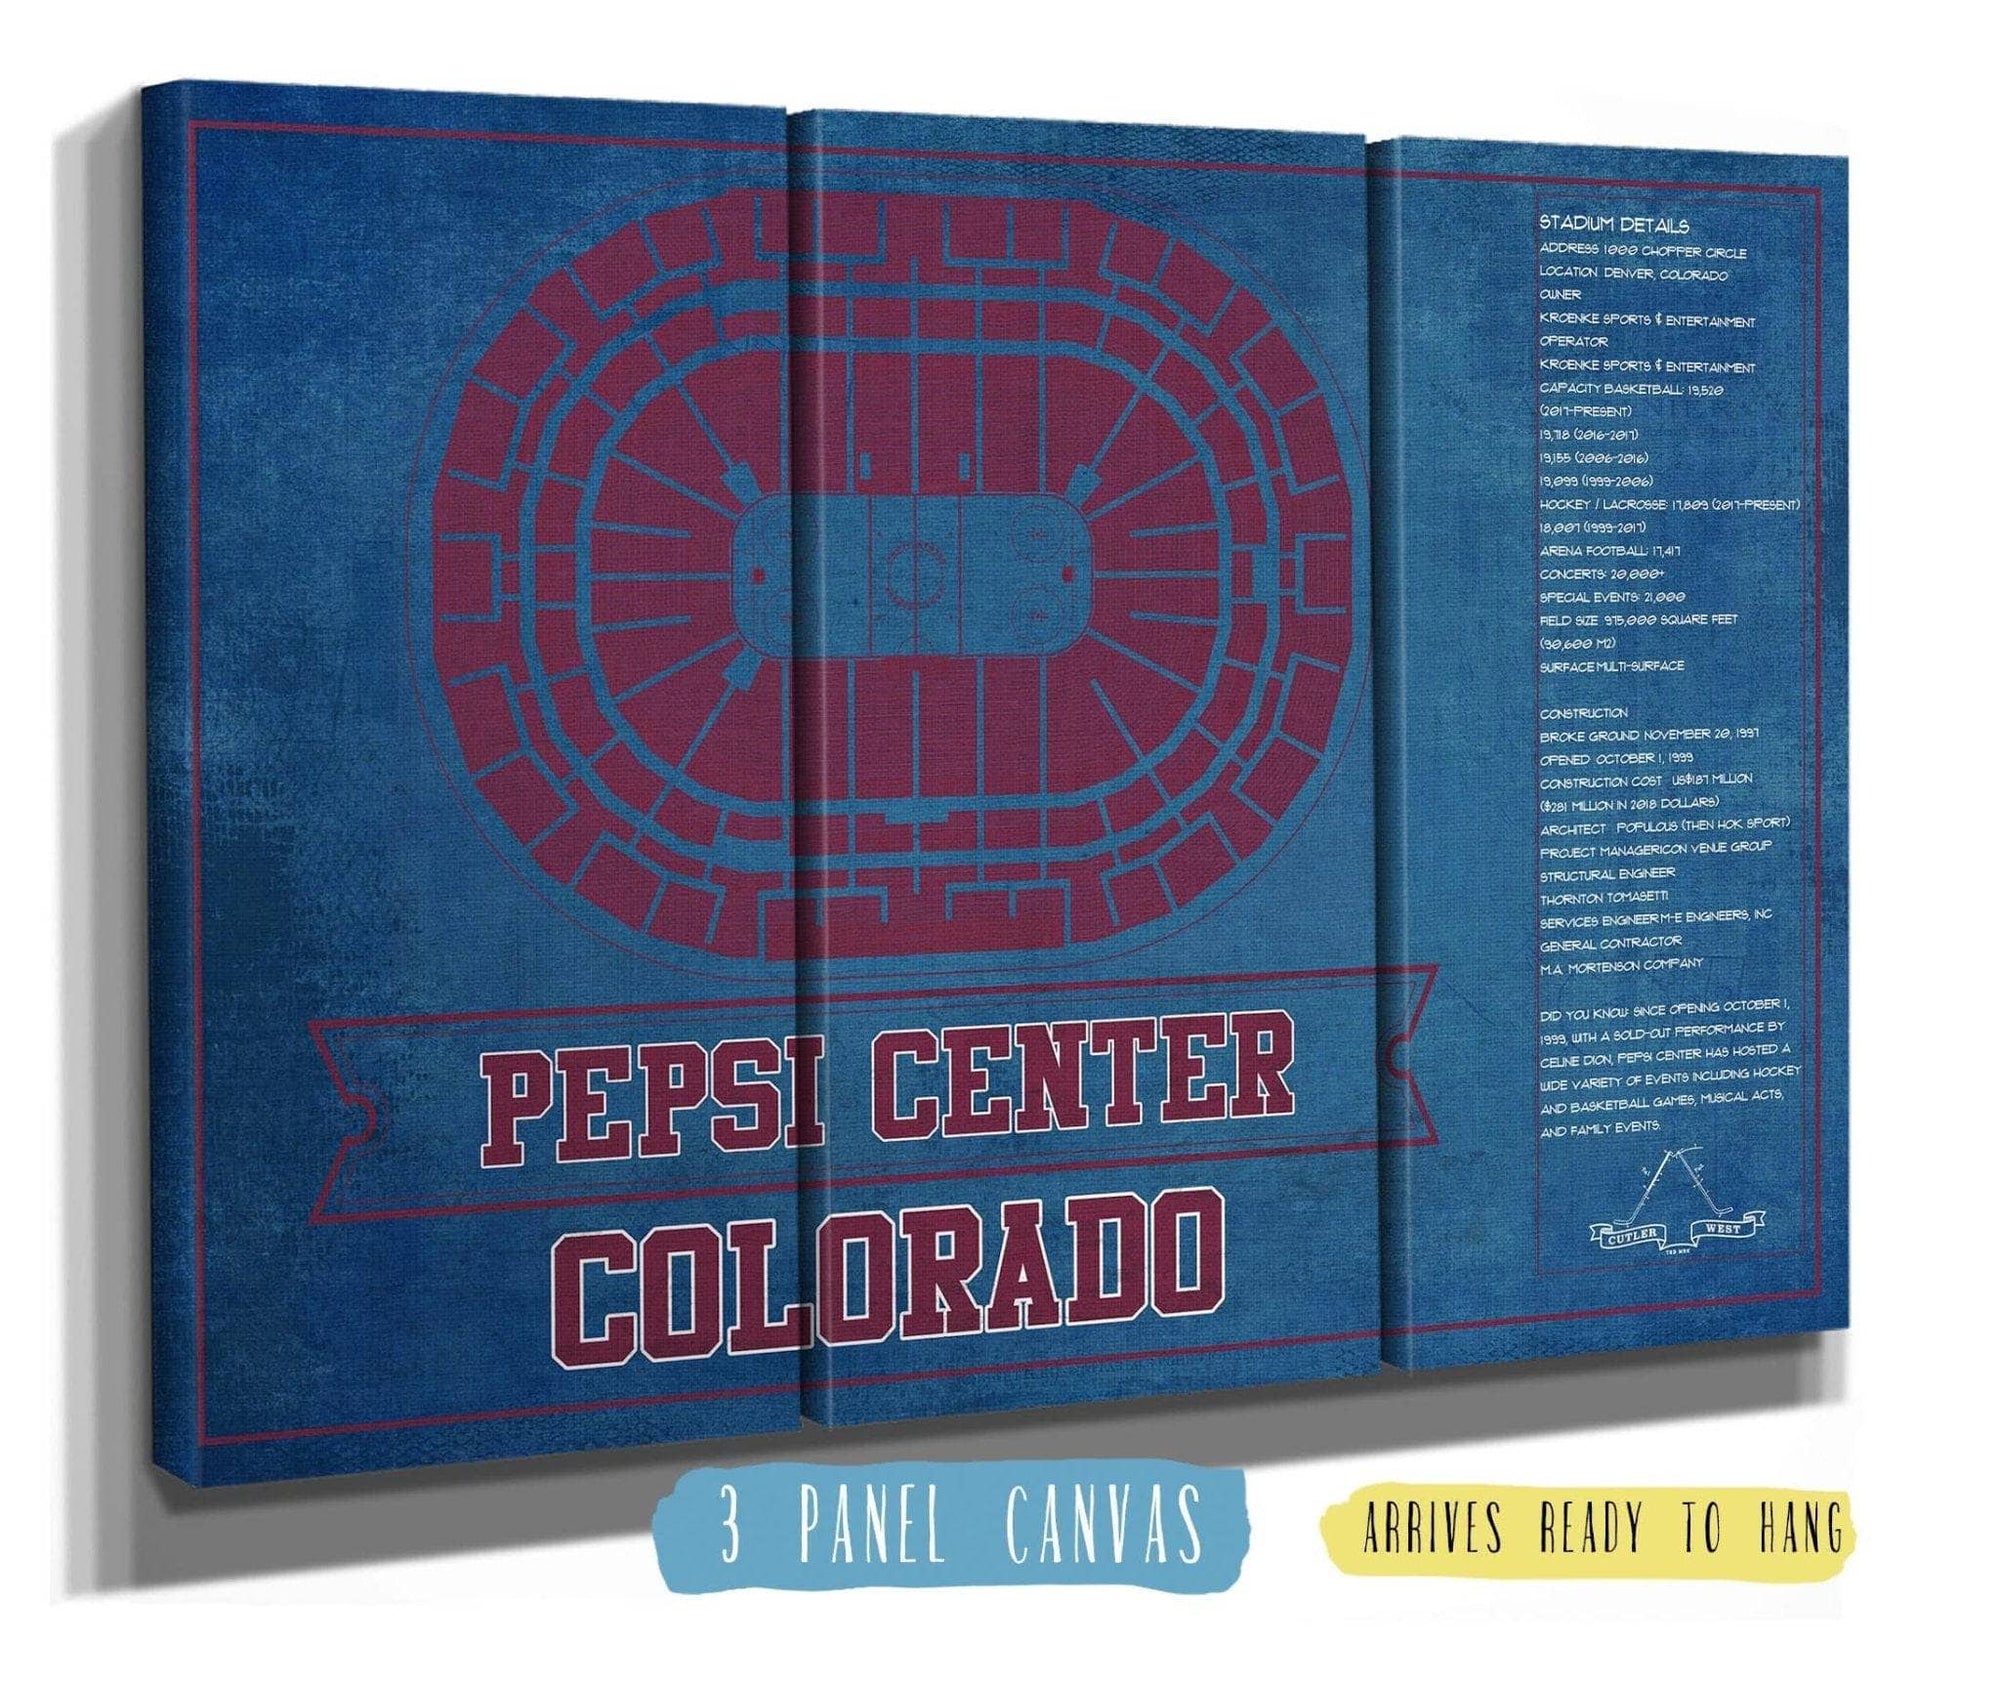 Colorado Avalanche Pepsi Center Seating Chart Vintage Hockey Print